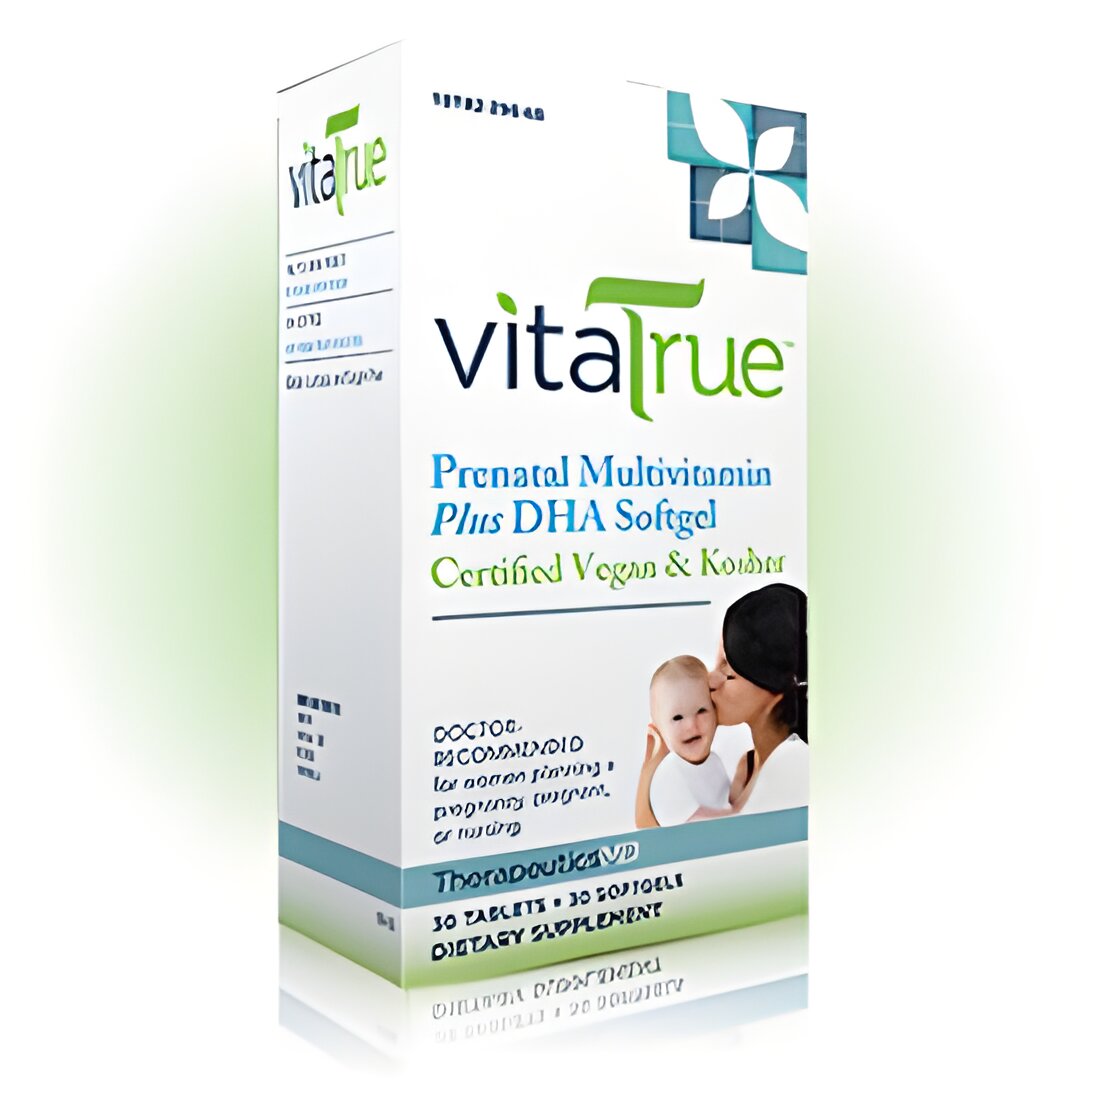 Free Vitamedmd Prenatal Vitamins (Professionals Only)